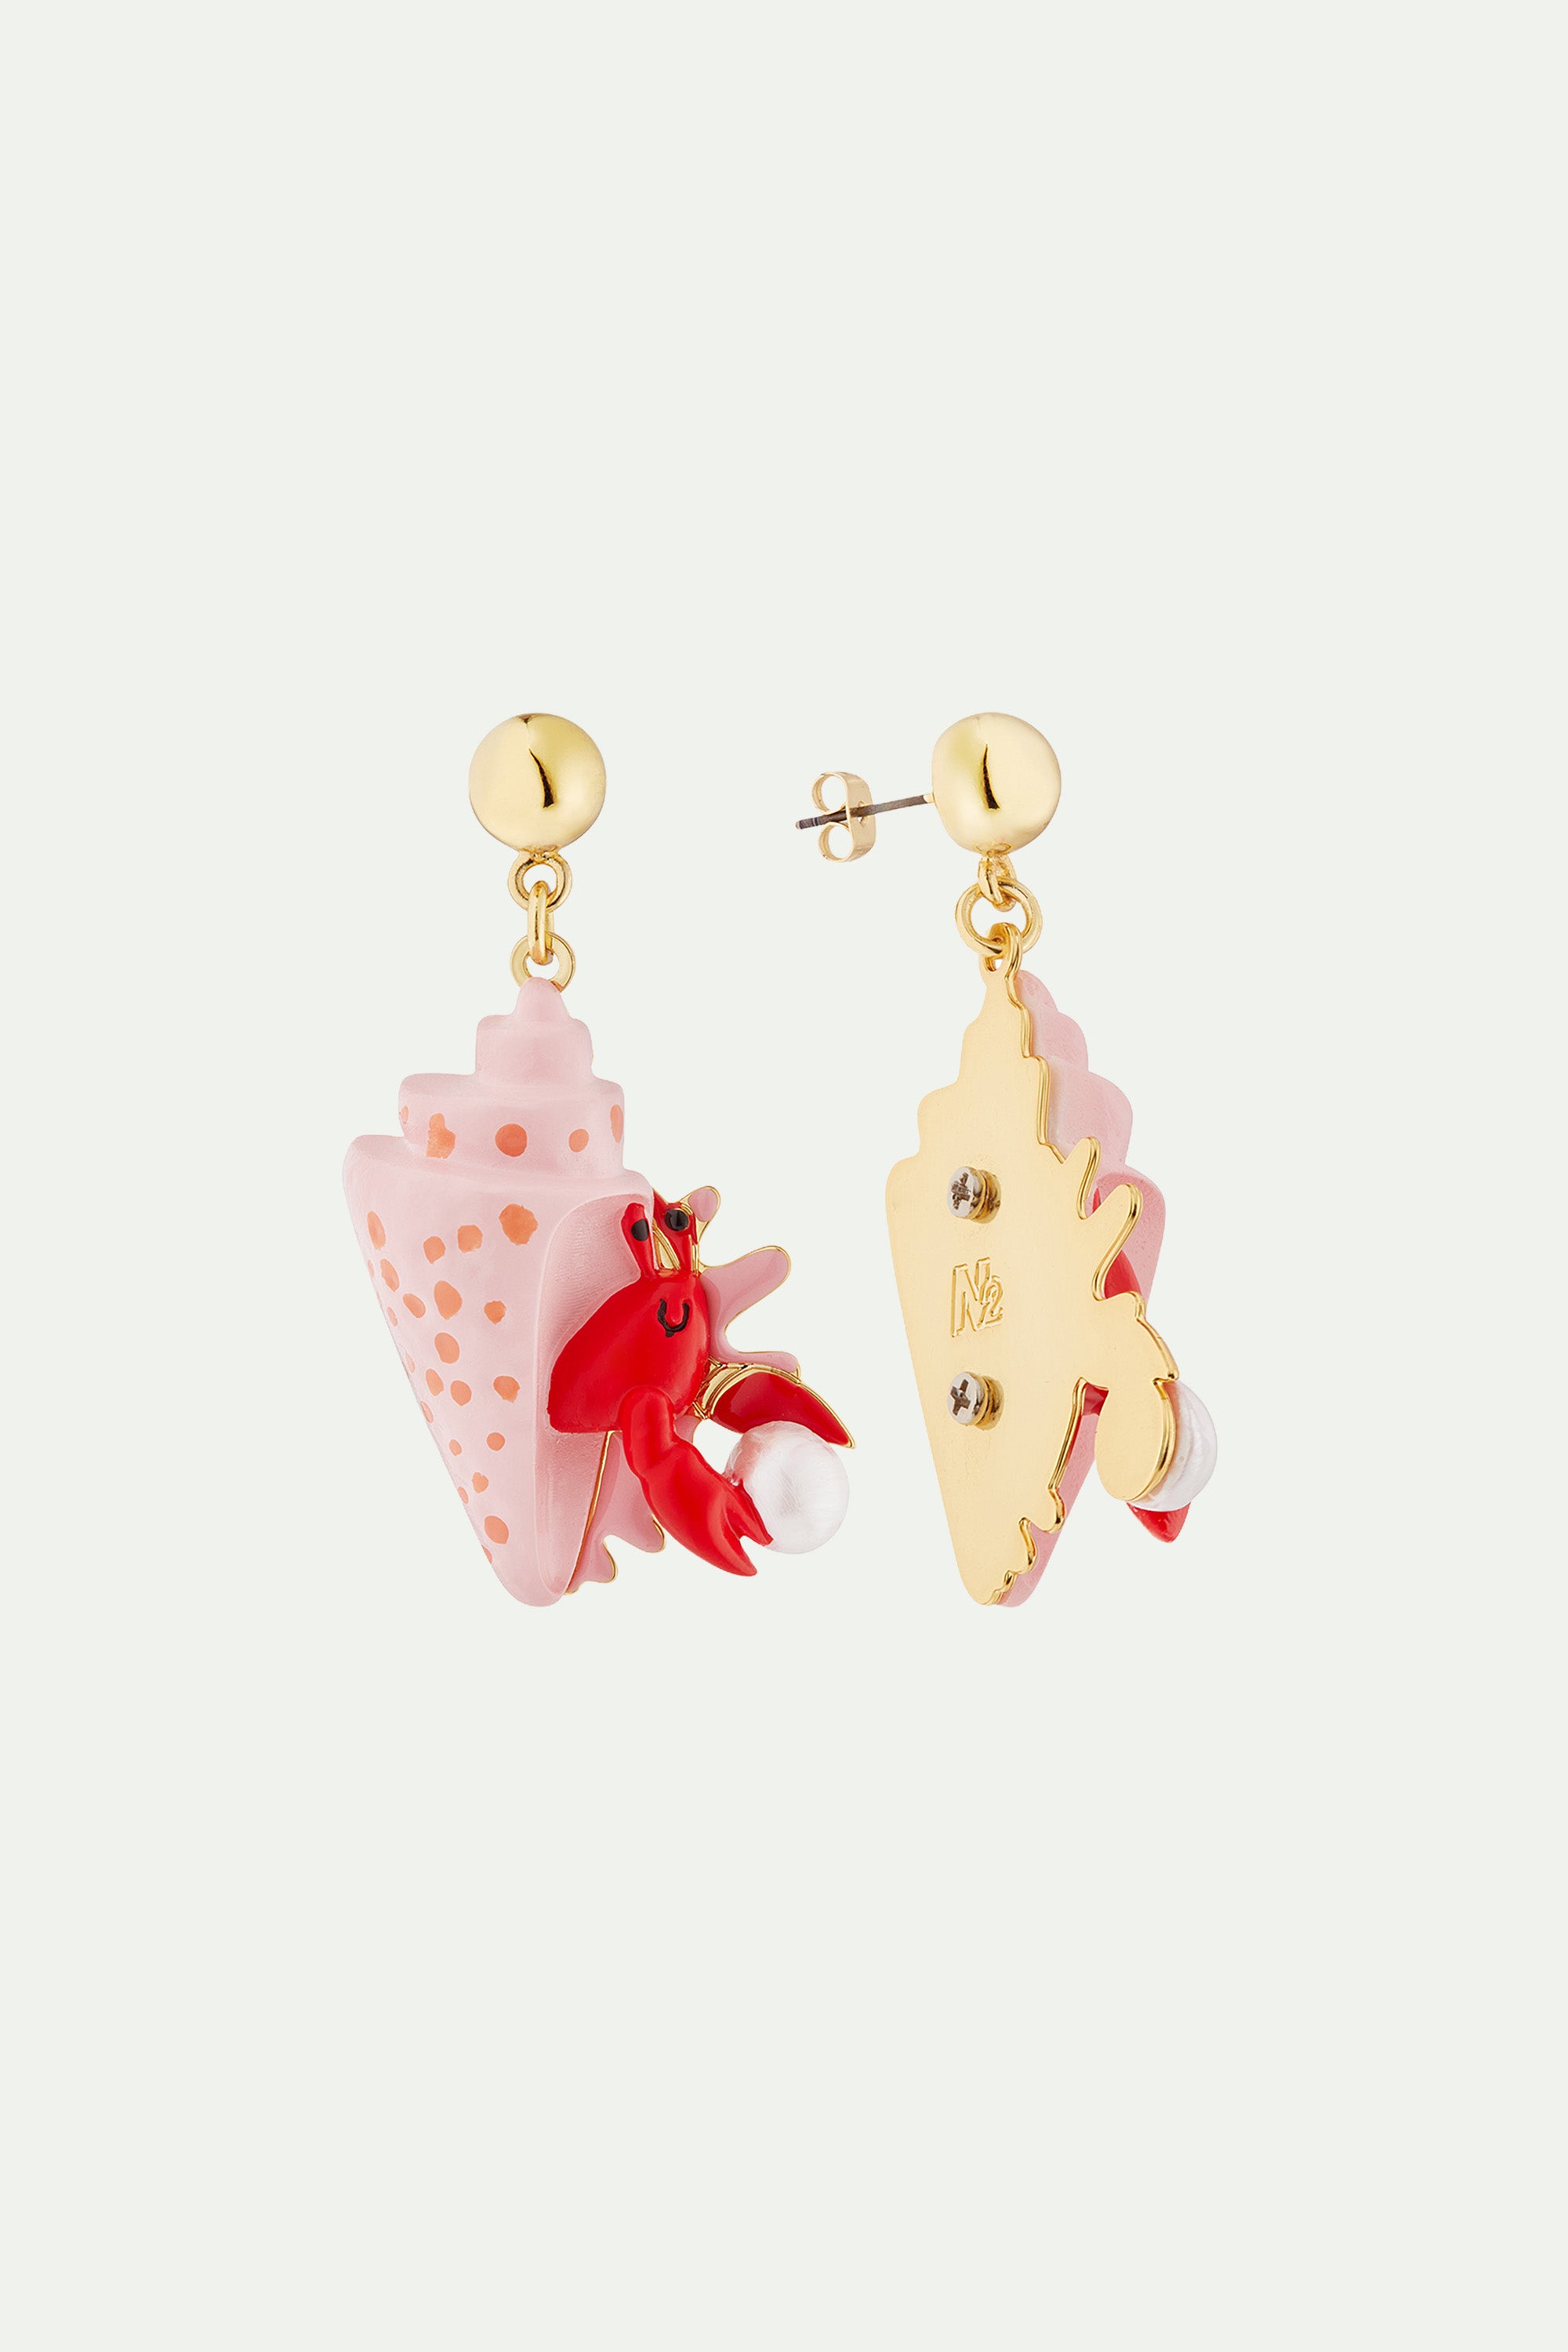 Hermit crab and pearl post earrings